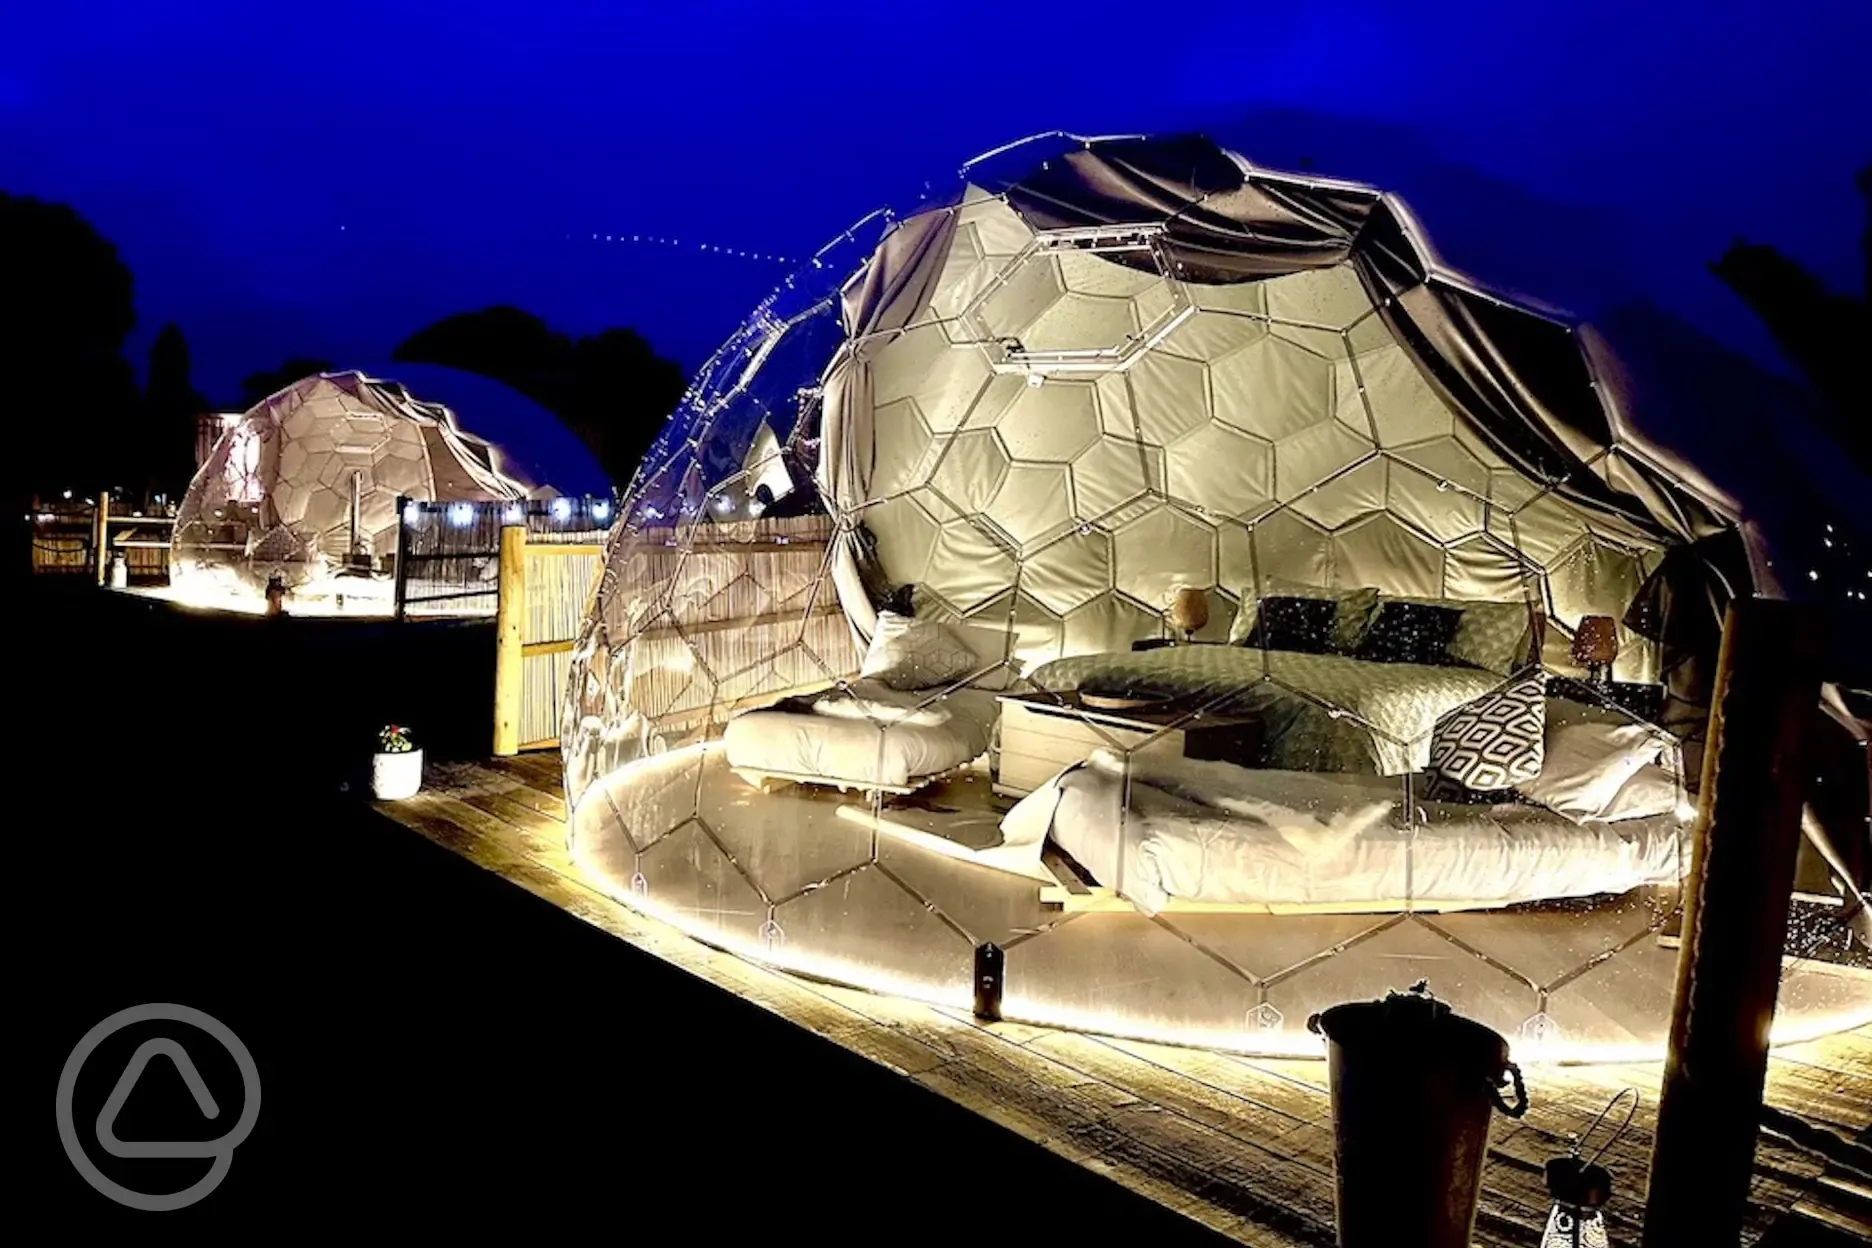 Glamping dome at night